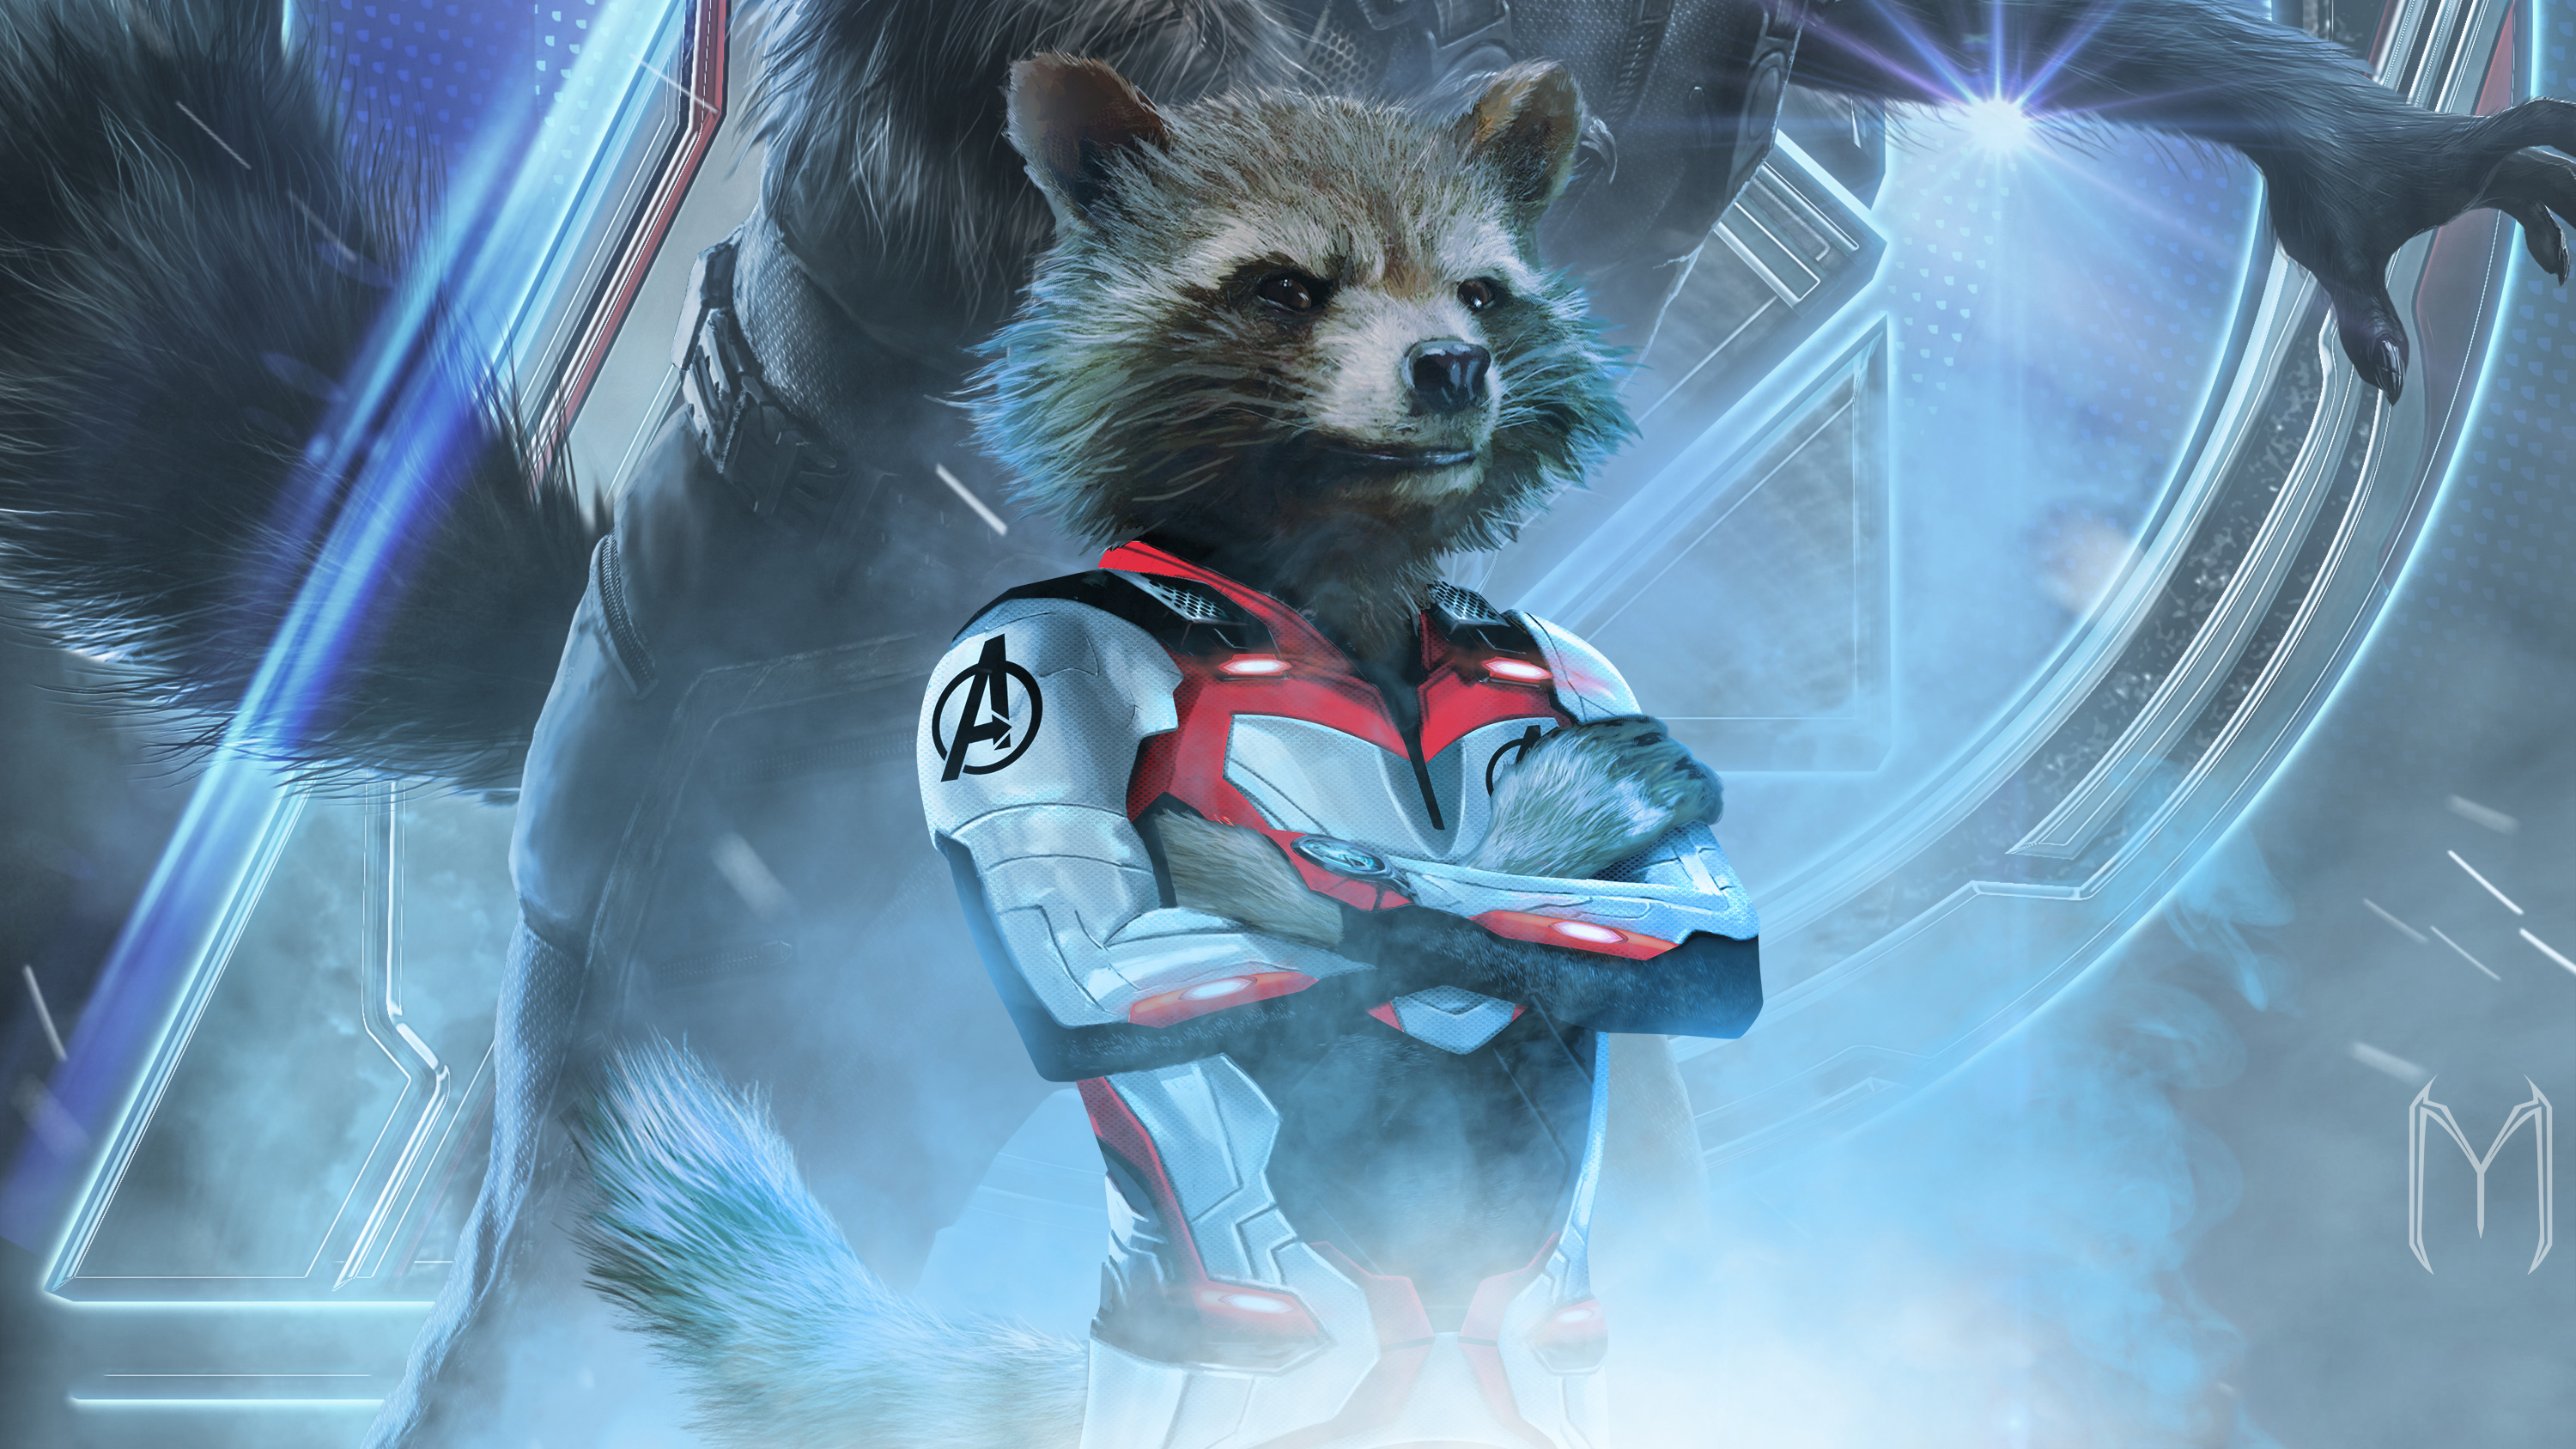 Avengers Endgame Rocket Raccoon 3000x1687